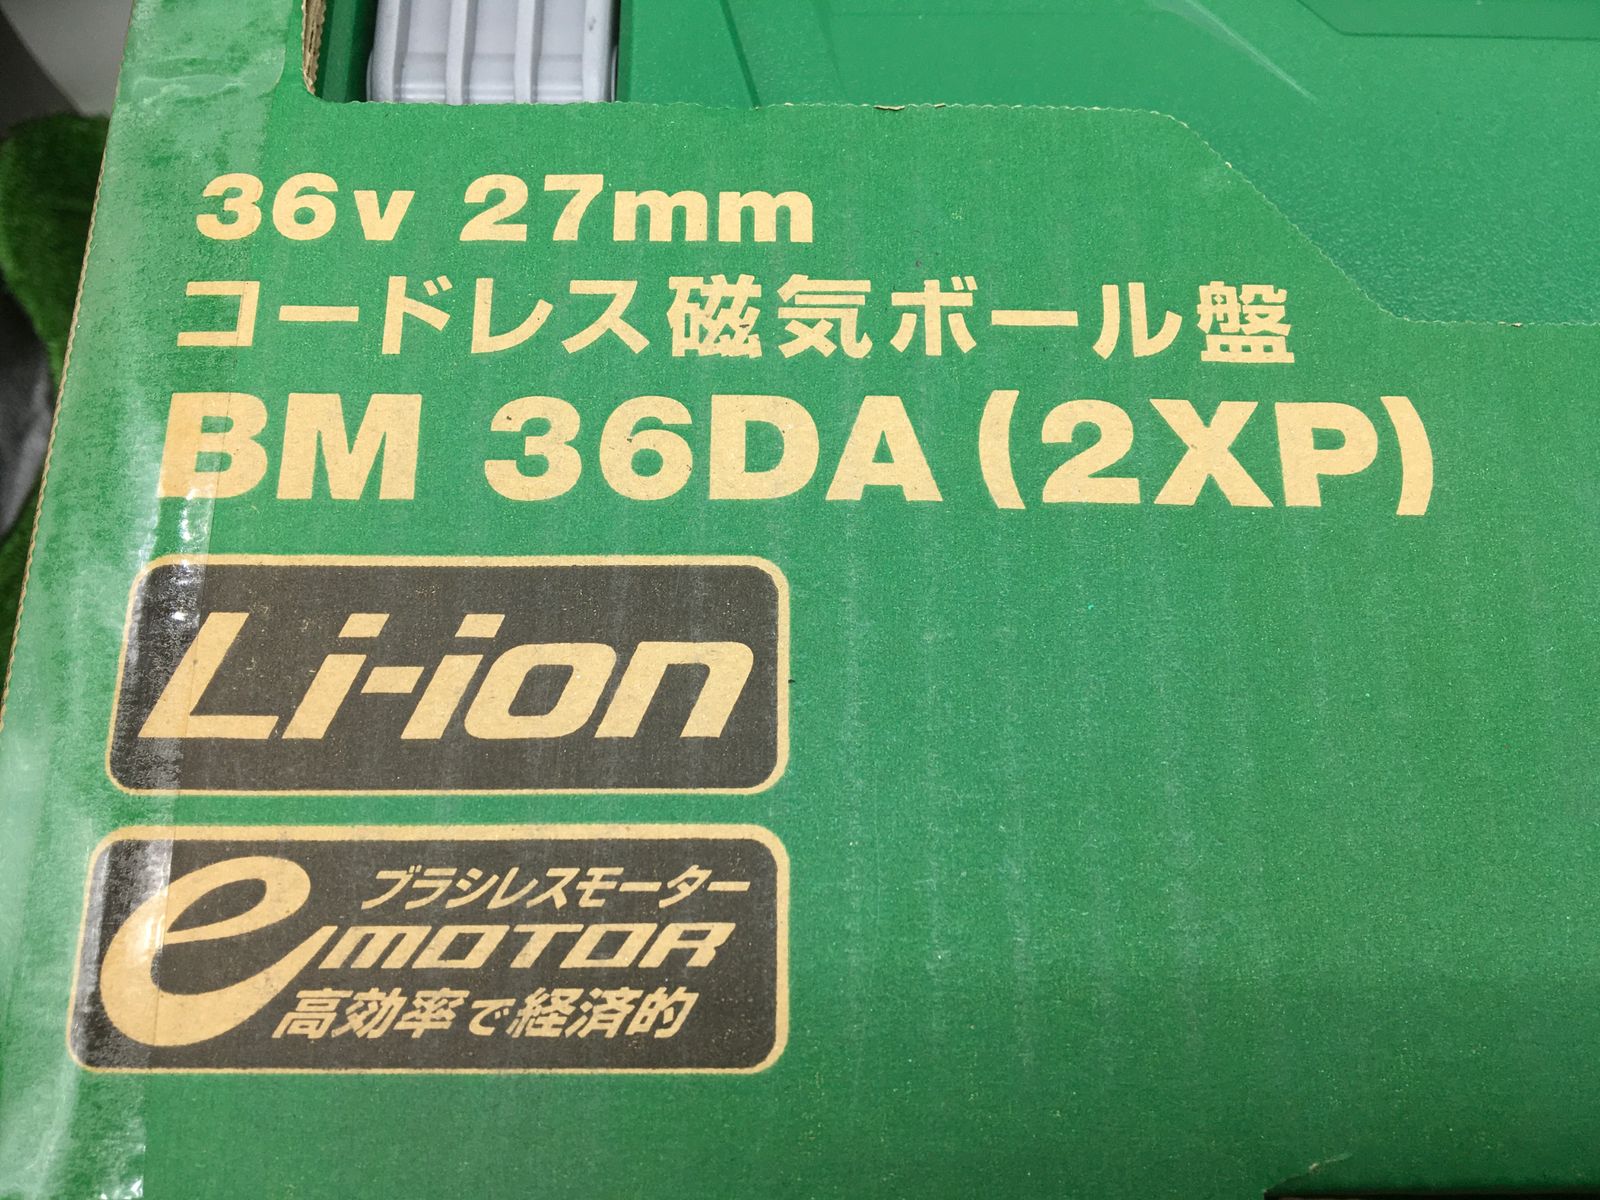 HIKOKI マルチボルト コードレス磁気ボール盤 BM36DA(2XP) - 17